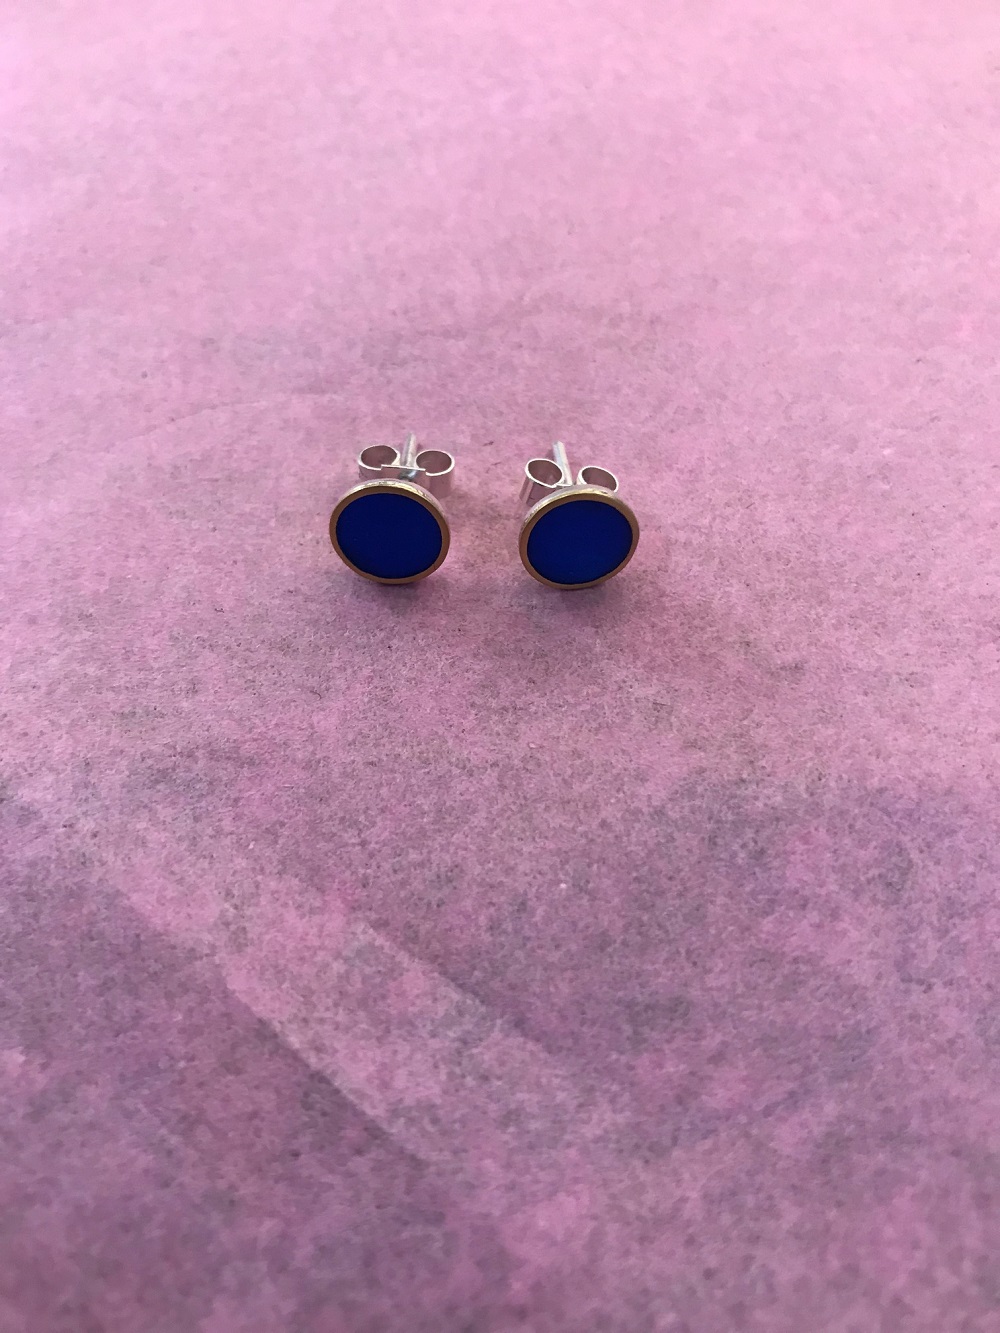 Earrings - Bright blue circle studs